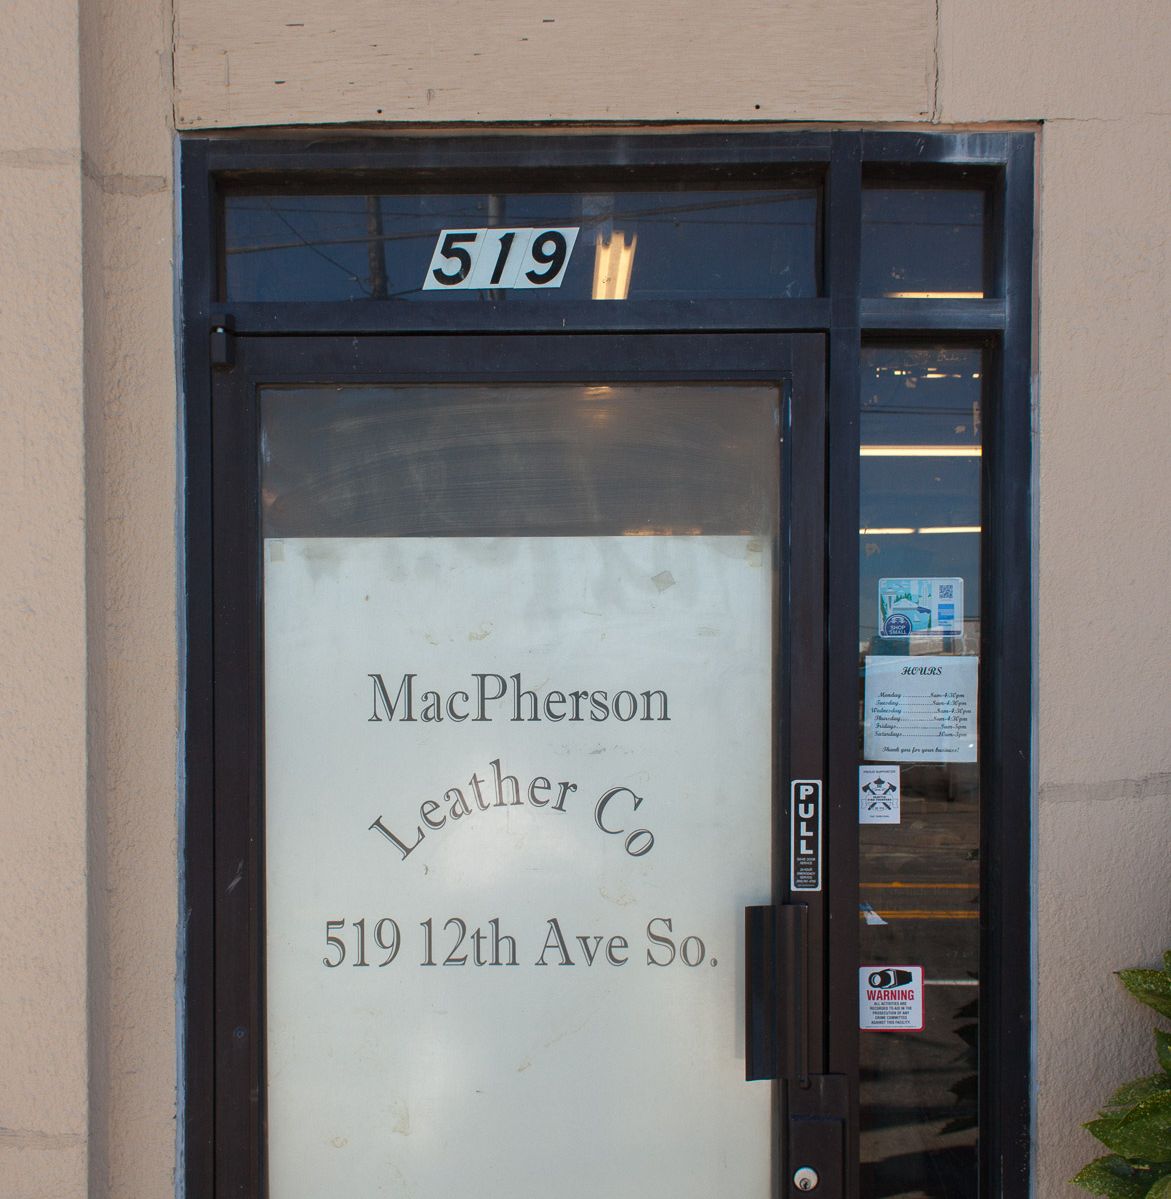 MacPherson Leather Co